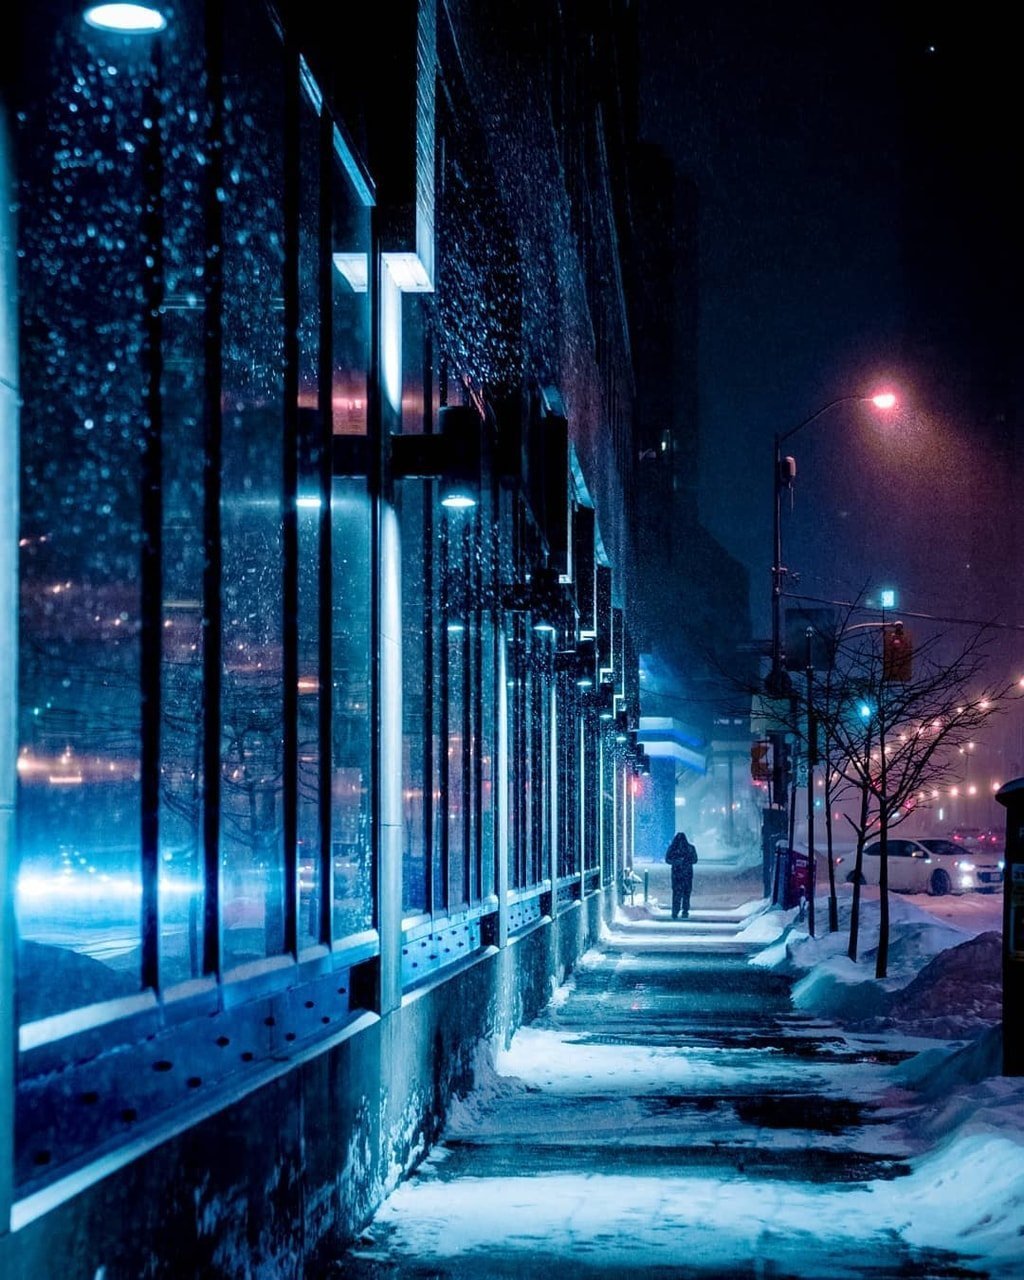 Cold nights 1. Ночной зимний город. Зима ночь город. Зимняя ночь в городе. Ночной город зимой.